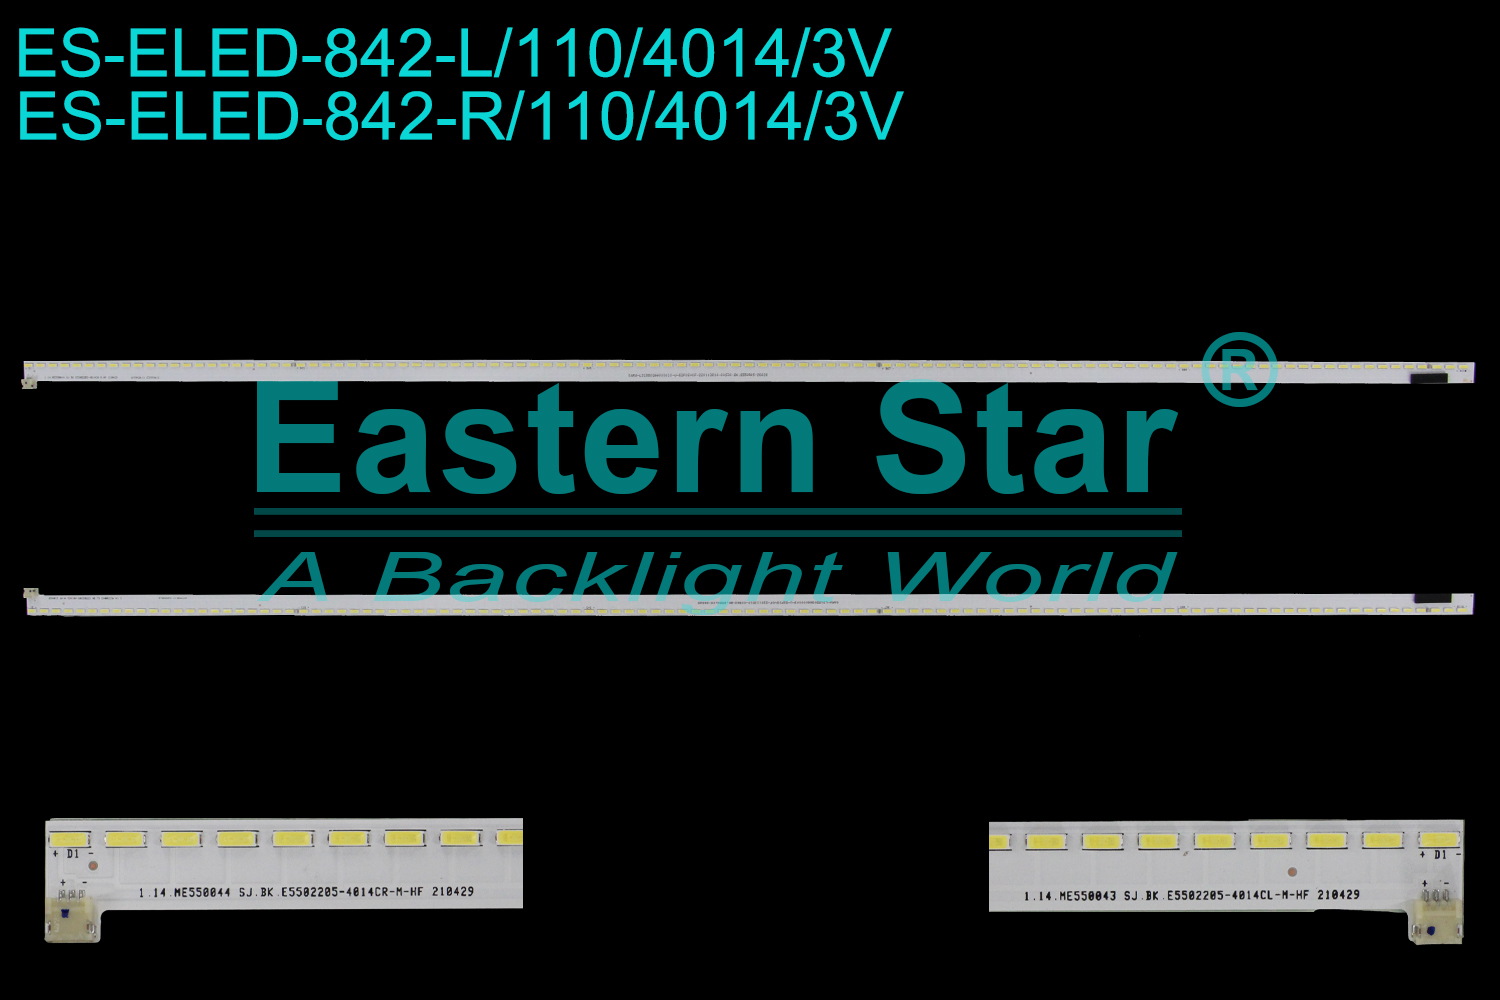 ES-ELED-842 ELED/EDGE TV backlight use for 55''  0ARA-L31550G66000009-U-52F05V0F-220113D10-00562-BK:E550L05-26625 YFPCB-11 E355813 1.14.ME550043 SJ.BK.E5502205-4014CL-M-HF 210429  LED BACKLIGHT KITS(2)